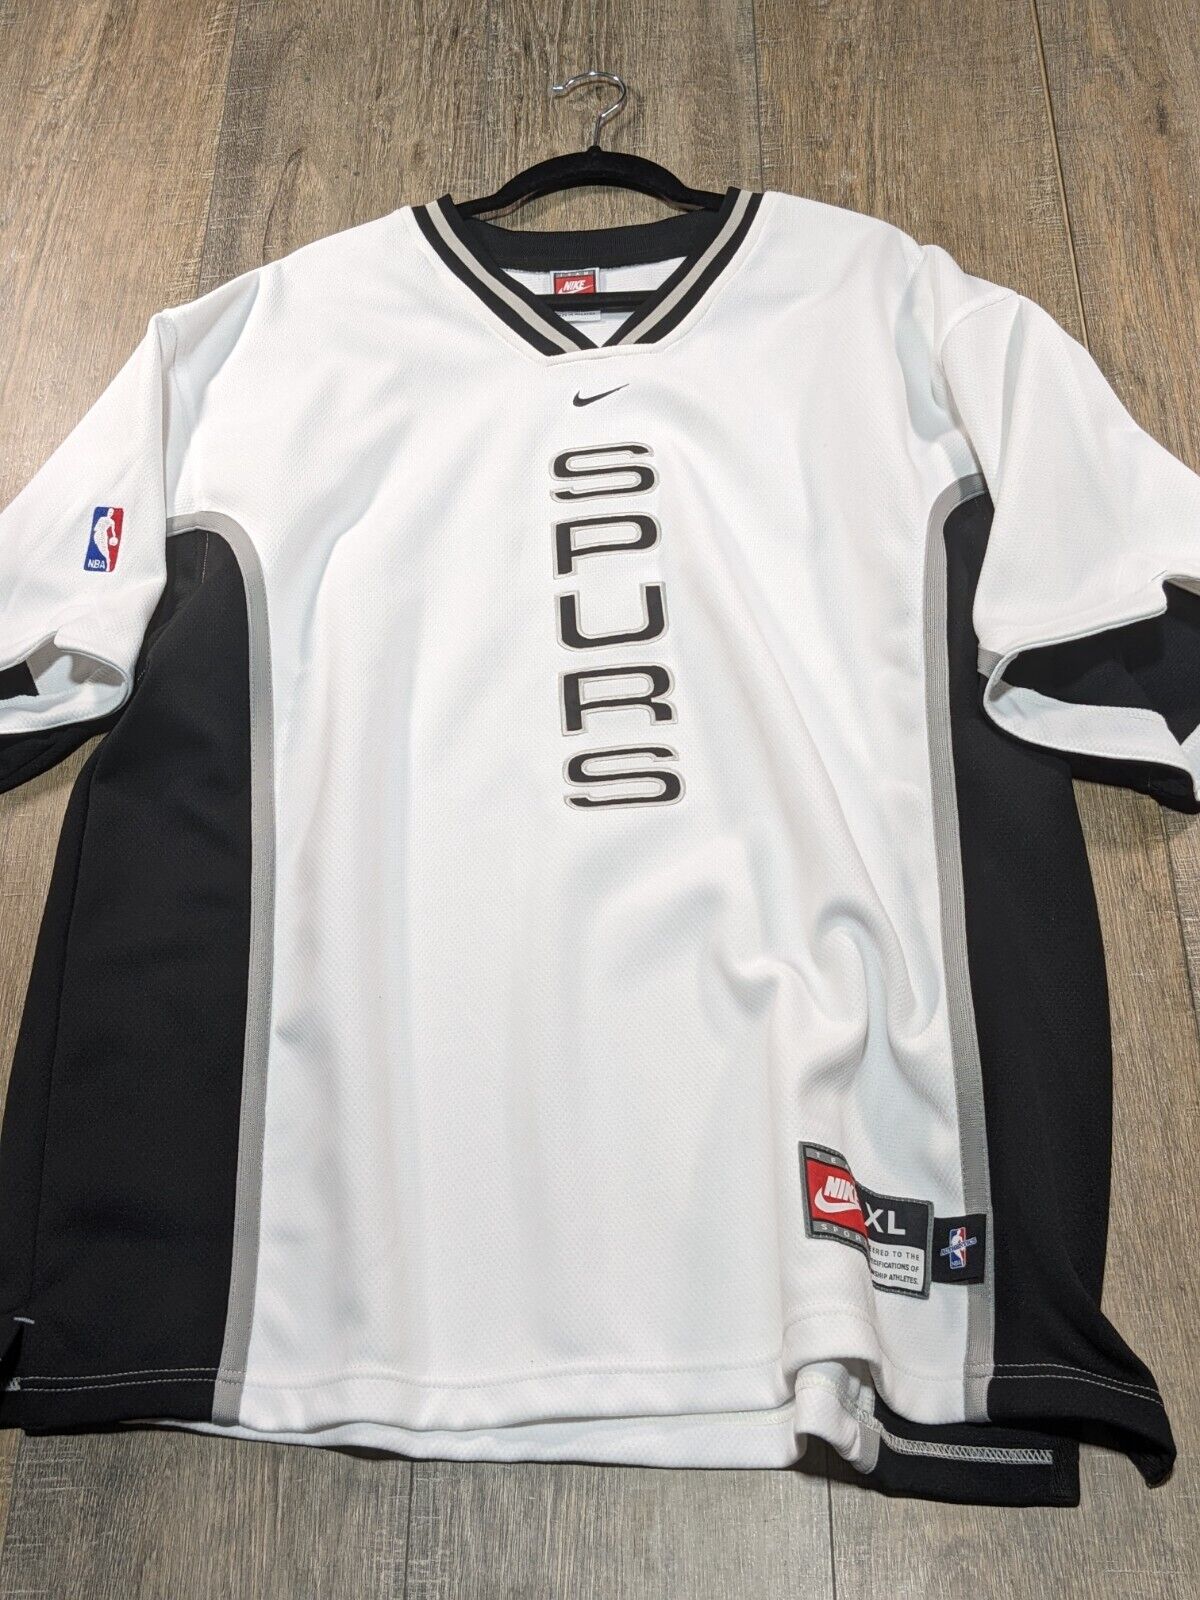 Vintage San Antonio Spurs Warmup Jersey 90s Mens XL Team Nike Sports Authentic